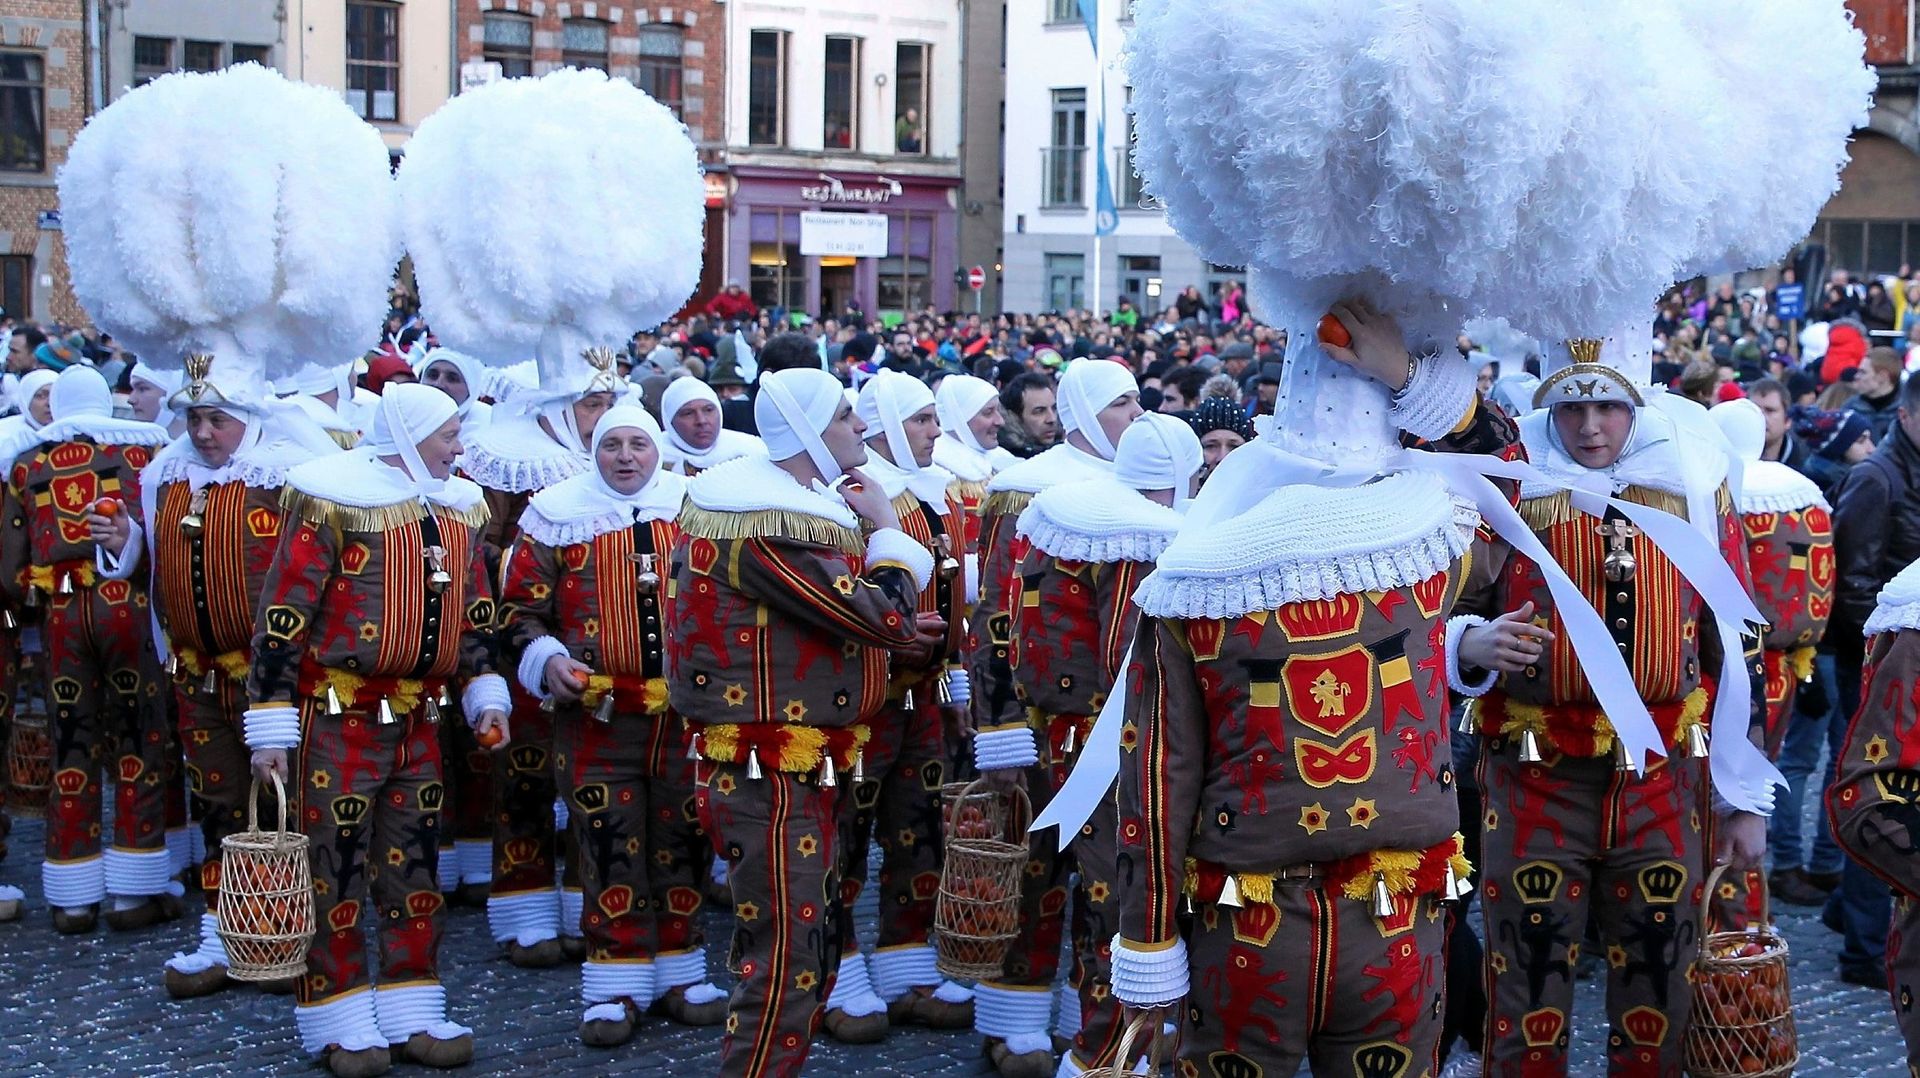 The Carnival of Binche in Belgium